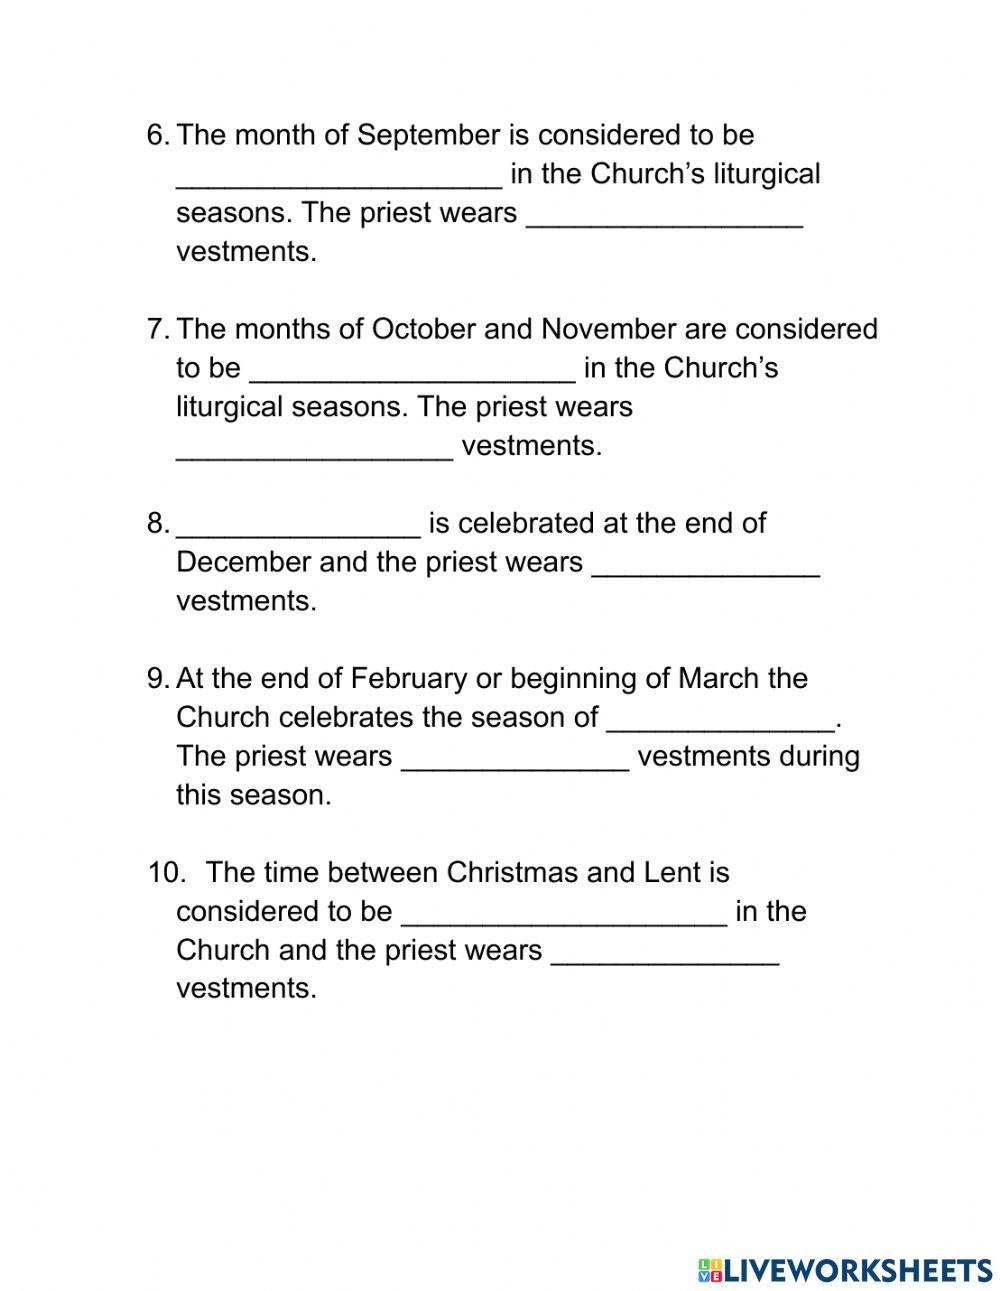 Quiz: Liturgical Seasons in the Catholic Church